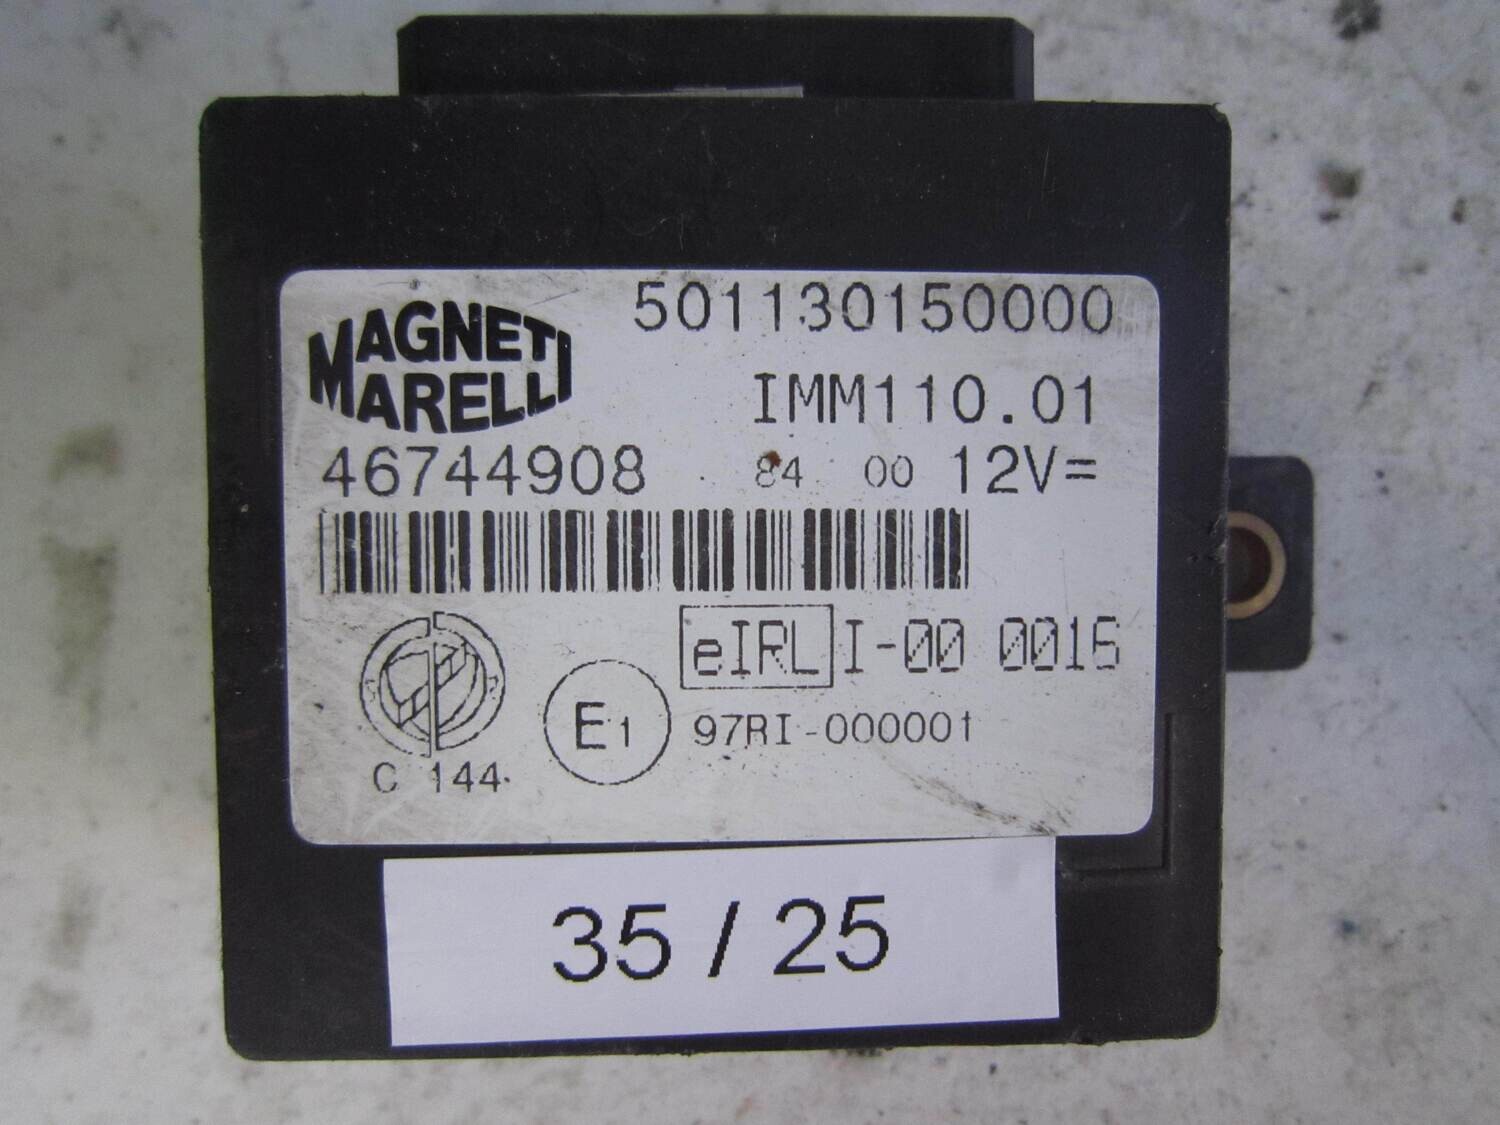 35-25 Centralina Immobilizer Magneti Marelli 46744908 501130150000 IMM110.01 ALFA ROMEO / FIAT / LANCIA VARIE